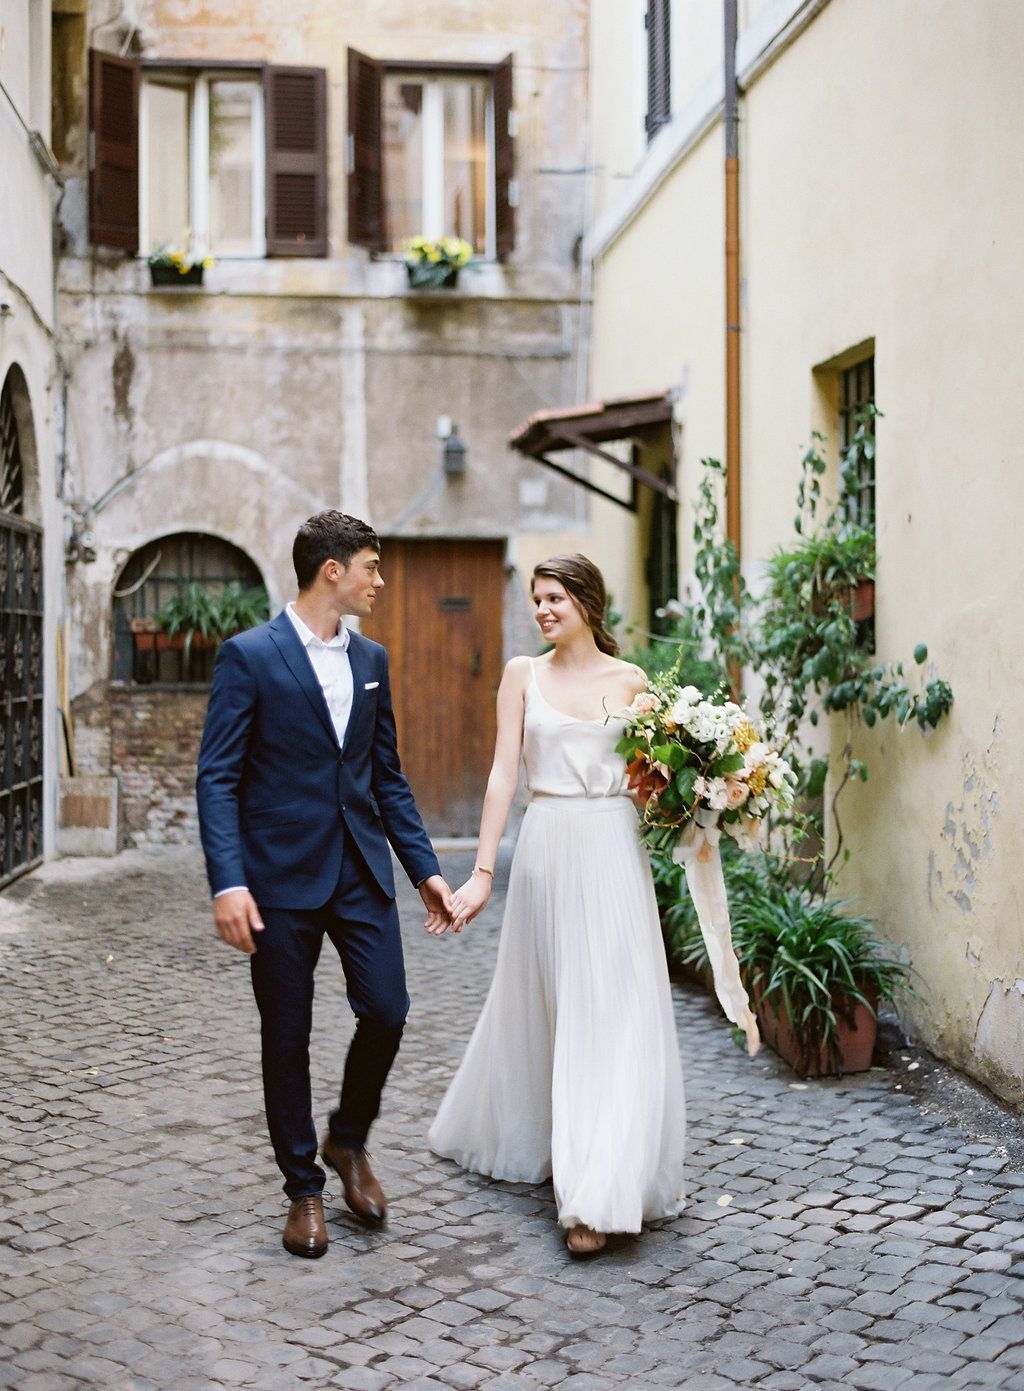 Vicki_Grafton_Photography_Rome_Italy_Wedding_Photographer_2017-135